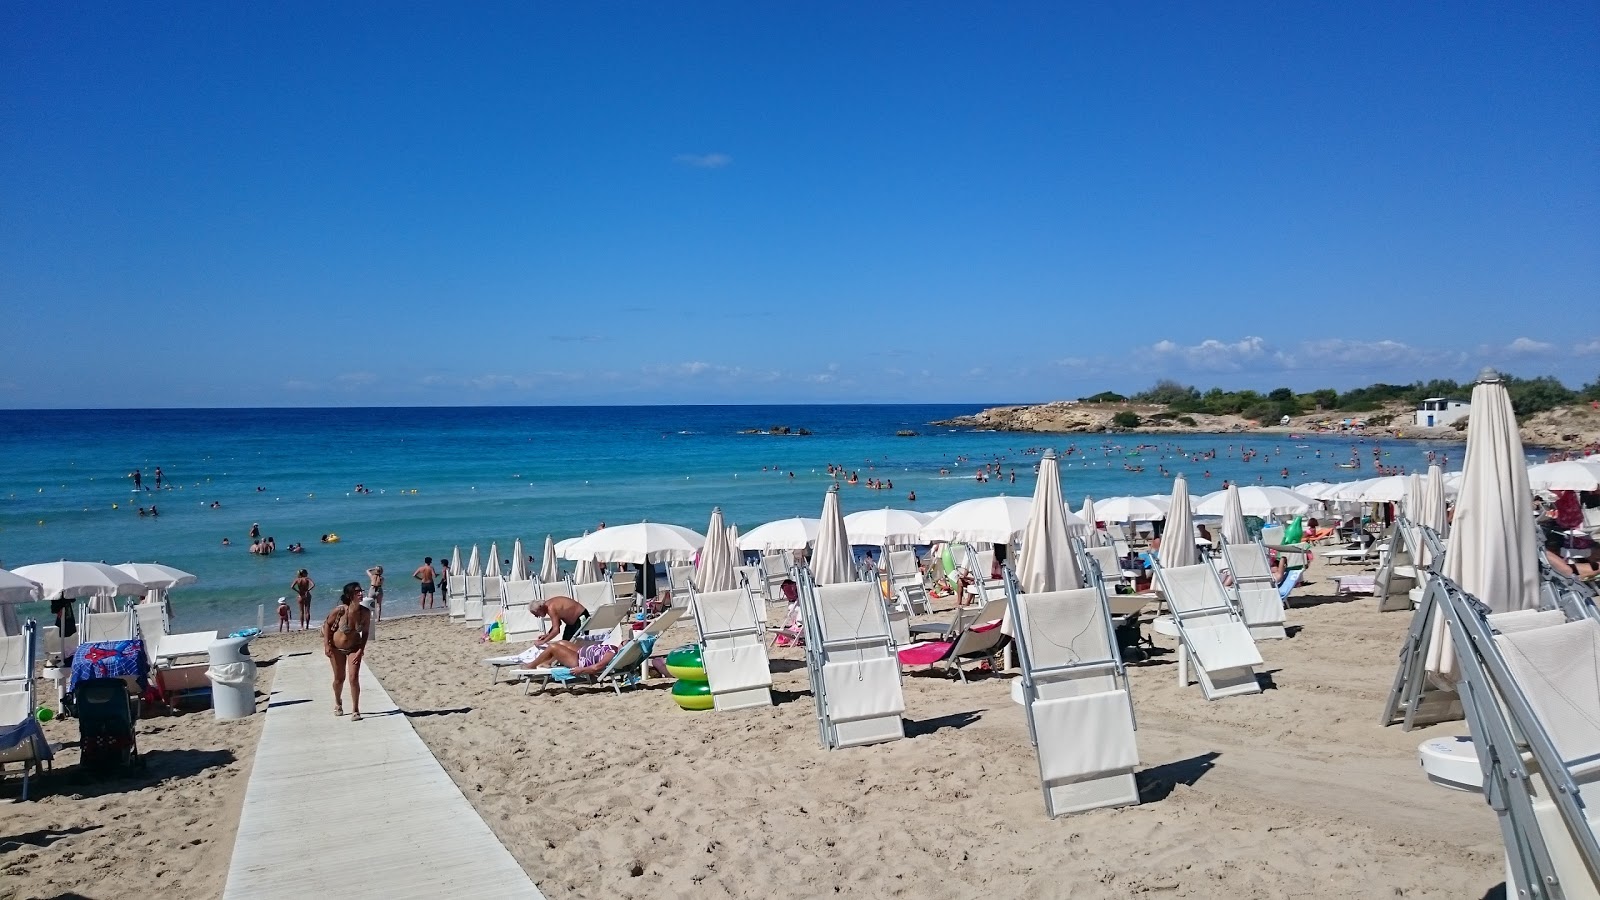 Foto van Spiaggia di Lido Silvana met gemiddeld niveau van netheid